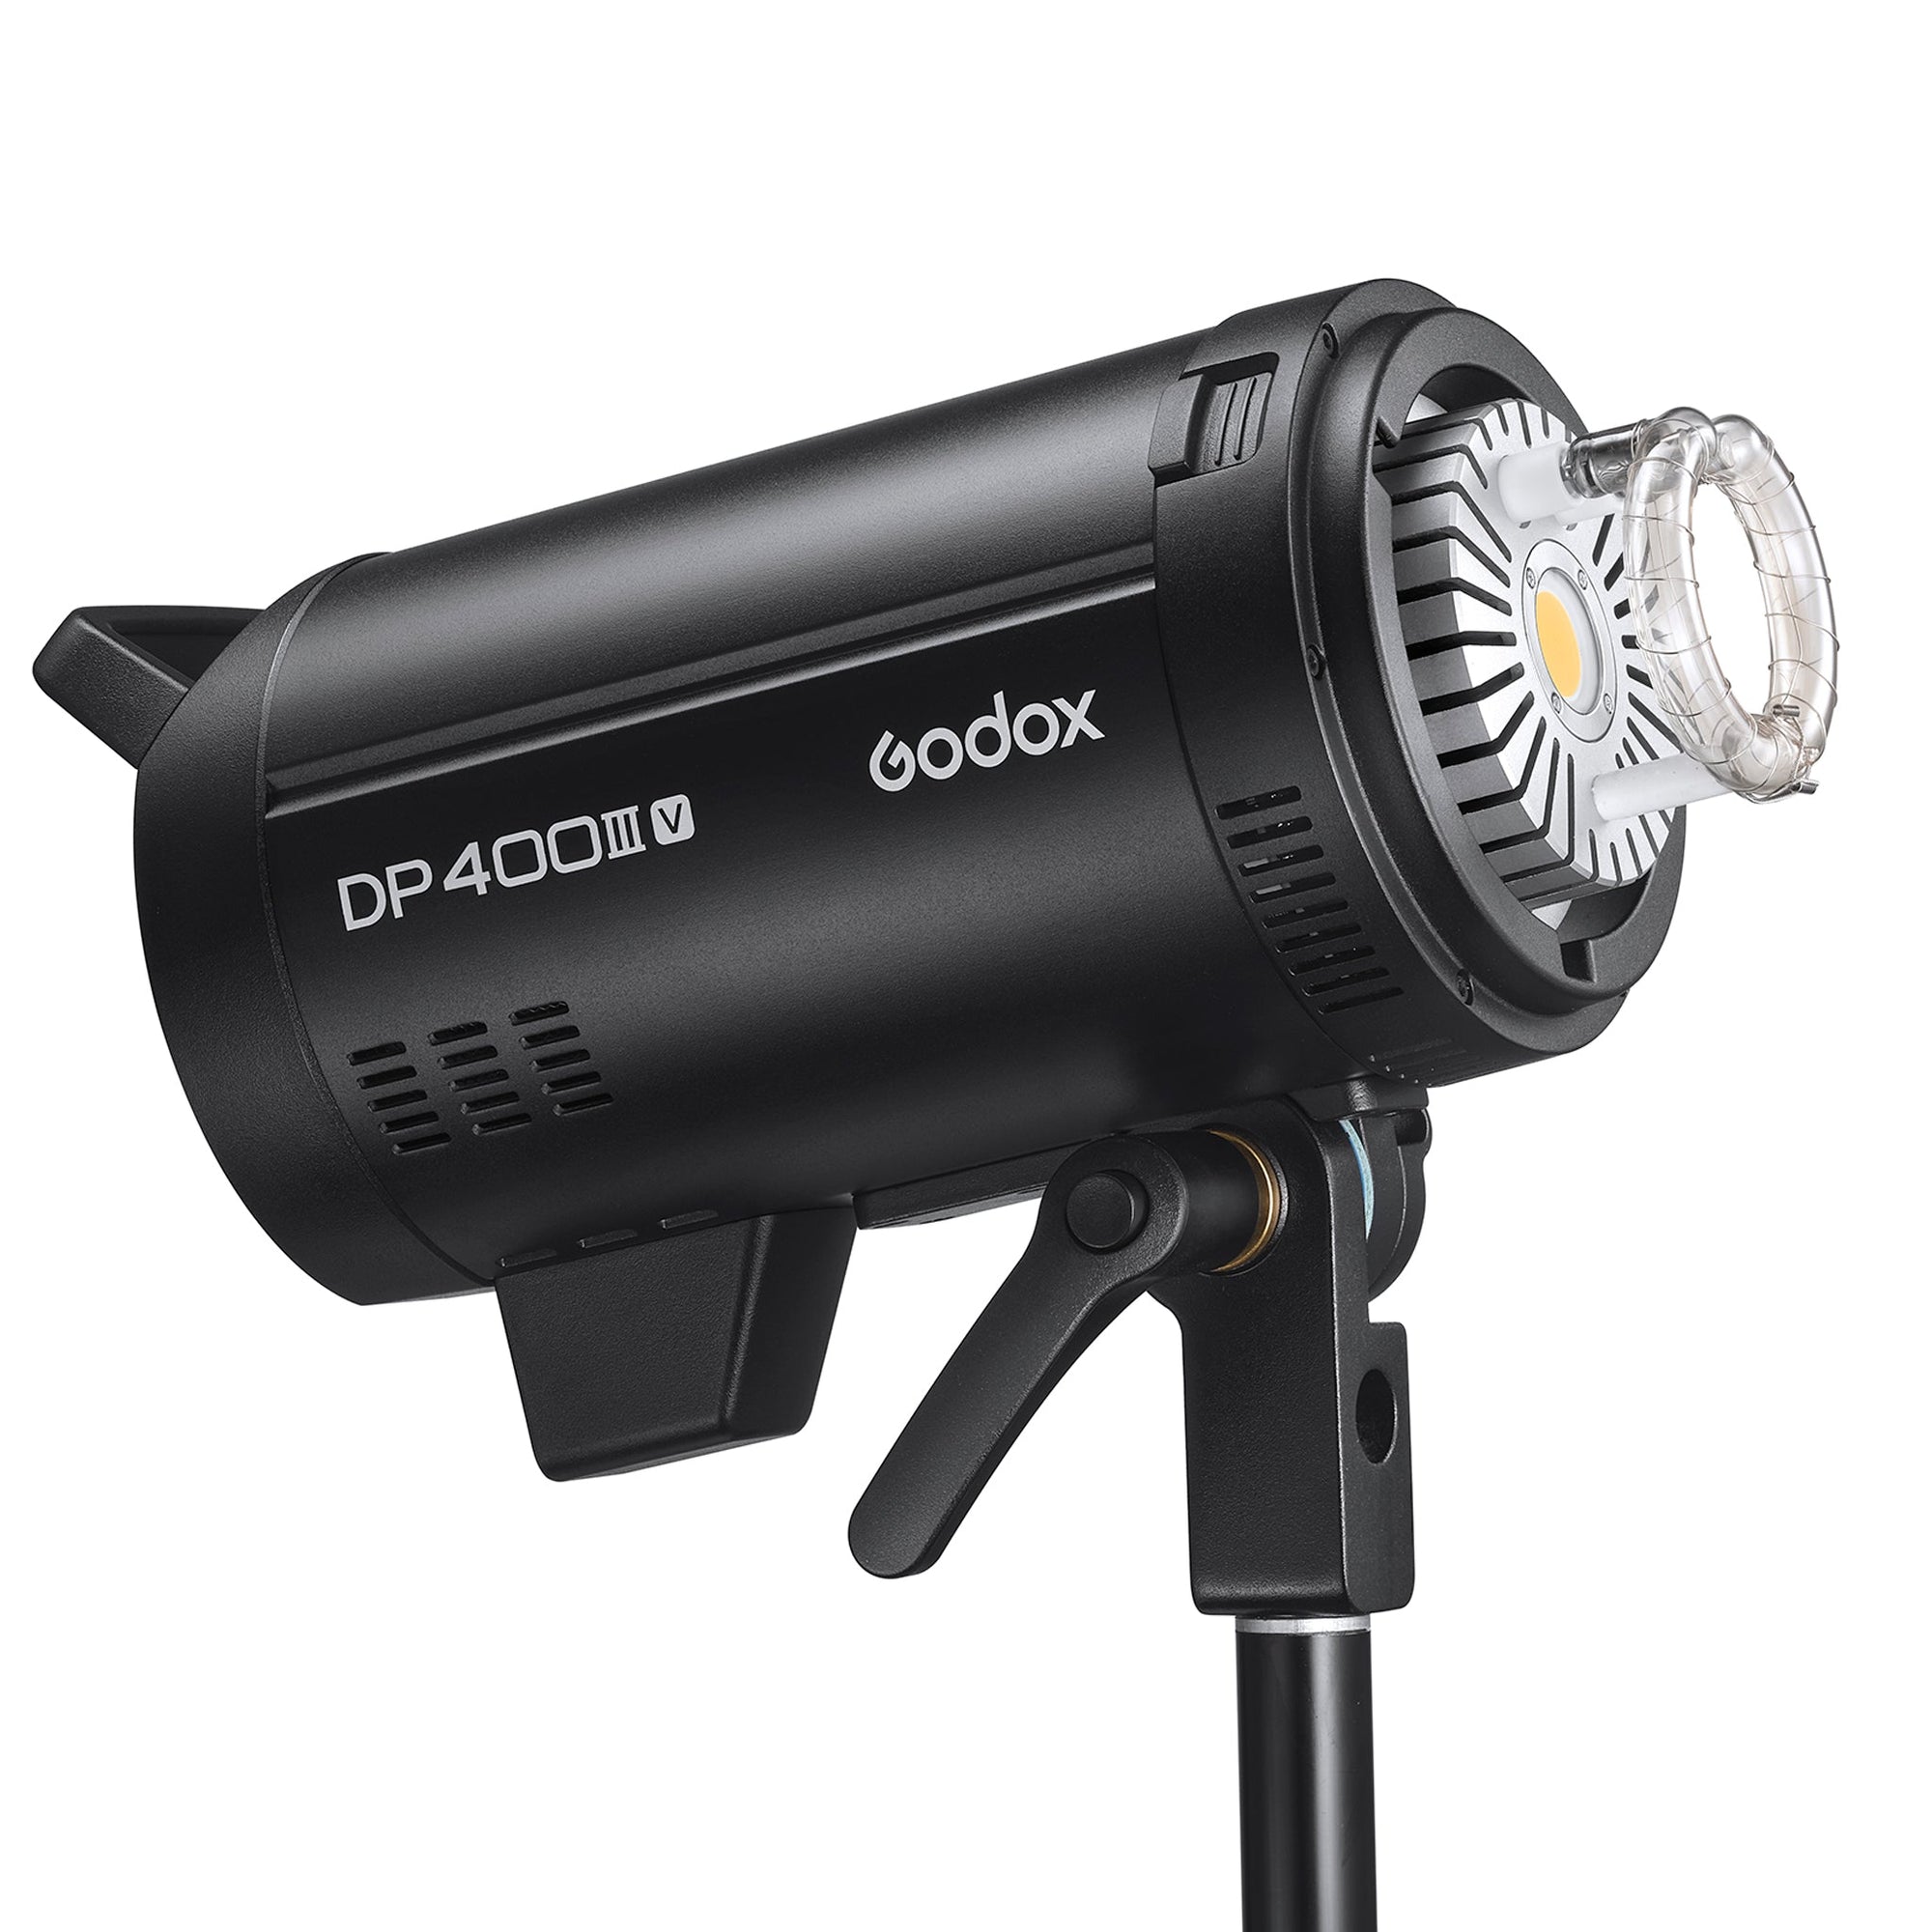 Strobepro Godox DP400iiiV Studio Lighting Kit